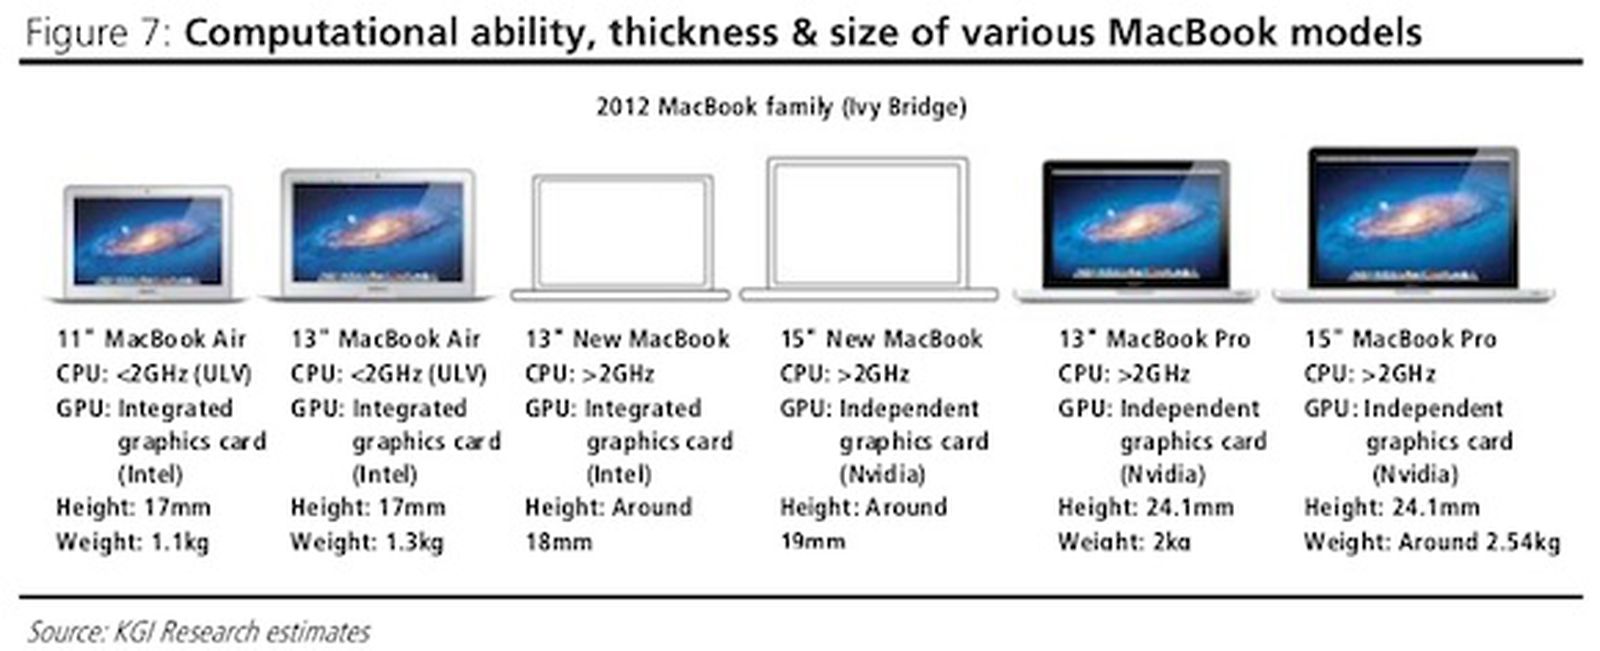 sne hvid gas Inca Empire Apple to Introduce Third MacBook Line with Retina Display at WWDC? -  MacRumors